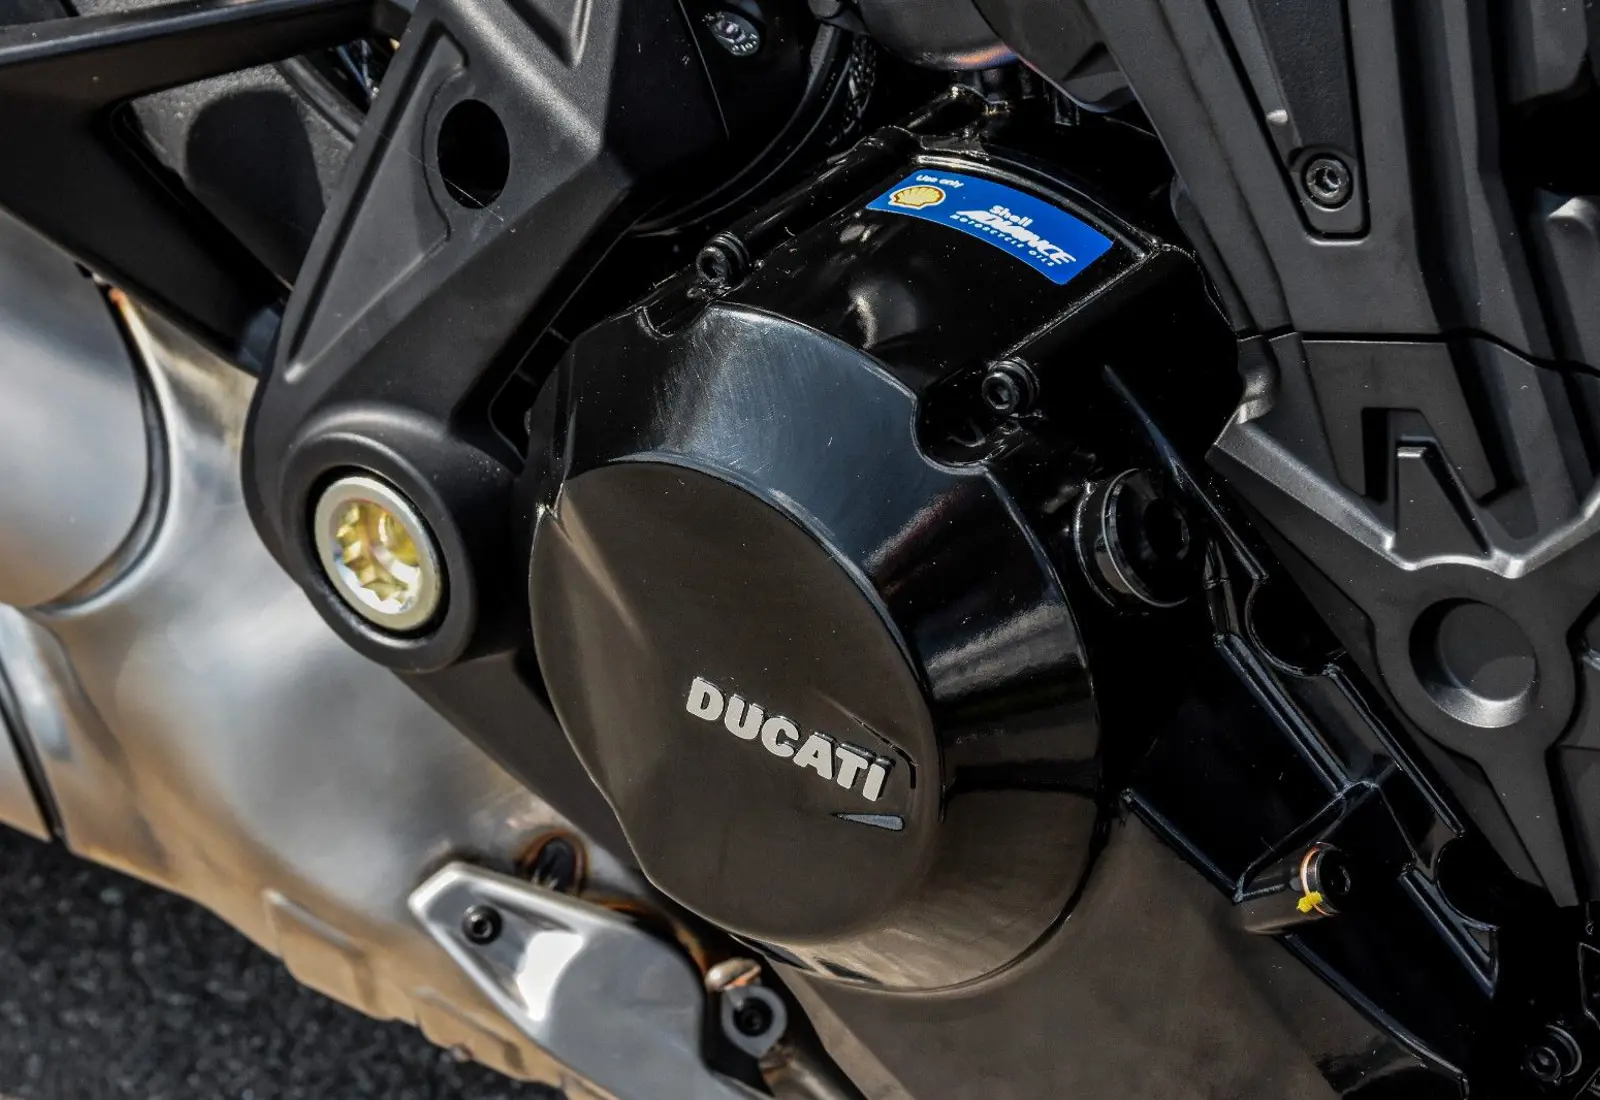 Ducati X-Diavel Nera * POLTRONA FRAU * 1 OF 500 * LIMITED ED - 44490